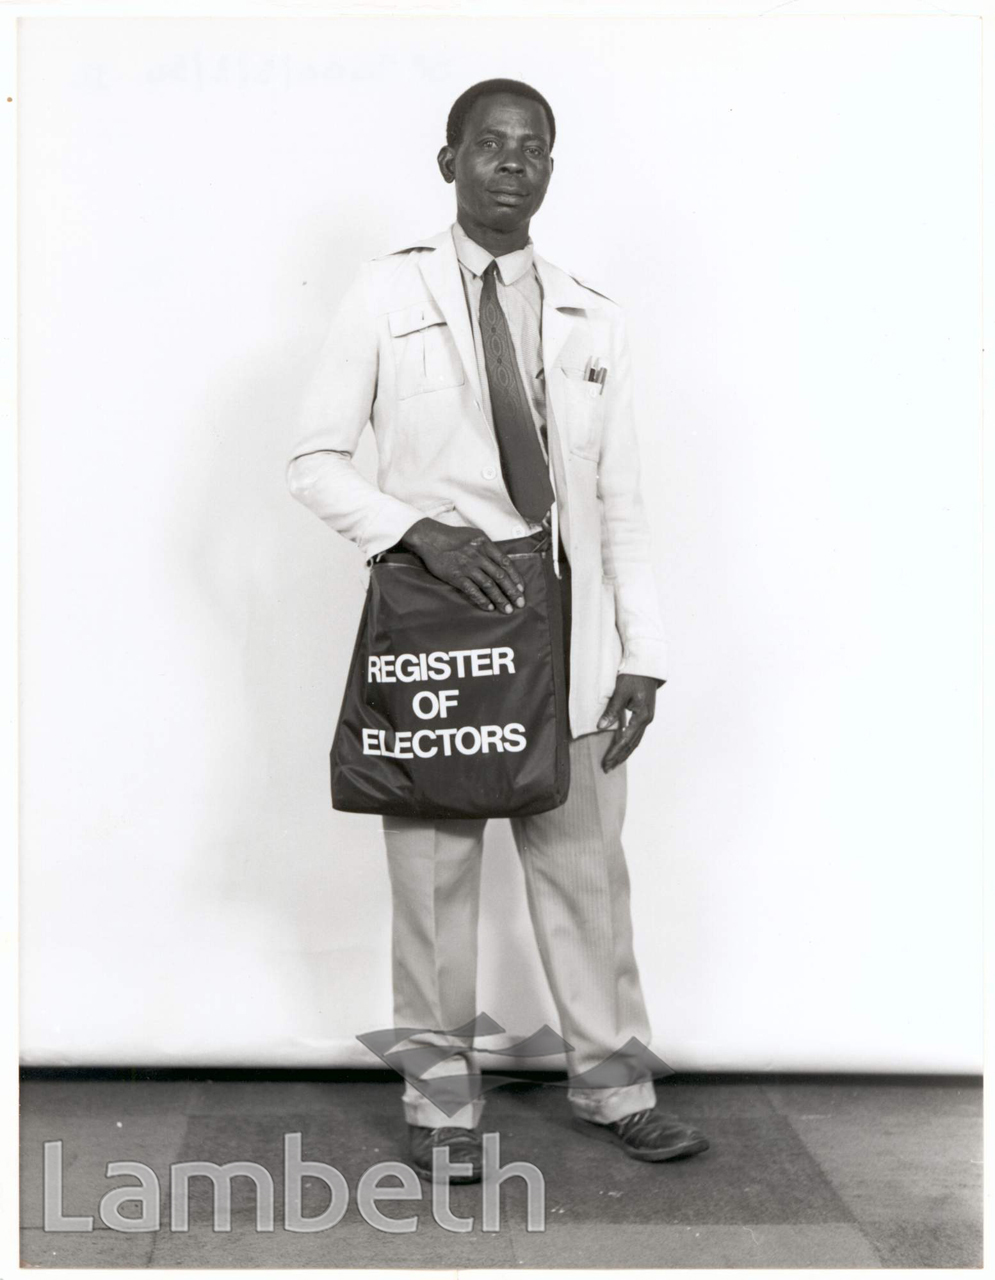 PORTRAITURE: MAN WITH ELECTORAL REGISTRATION BAG